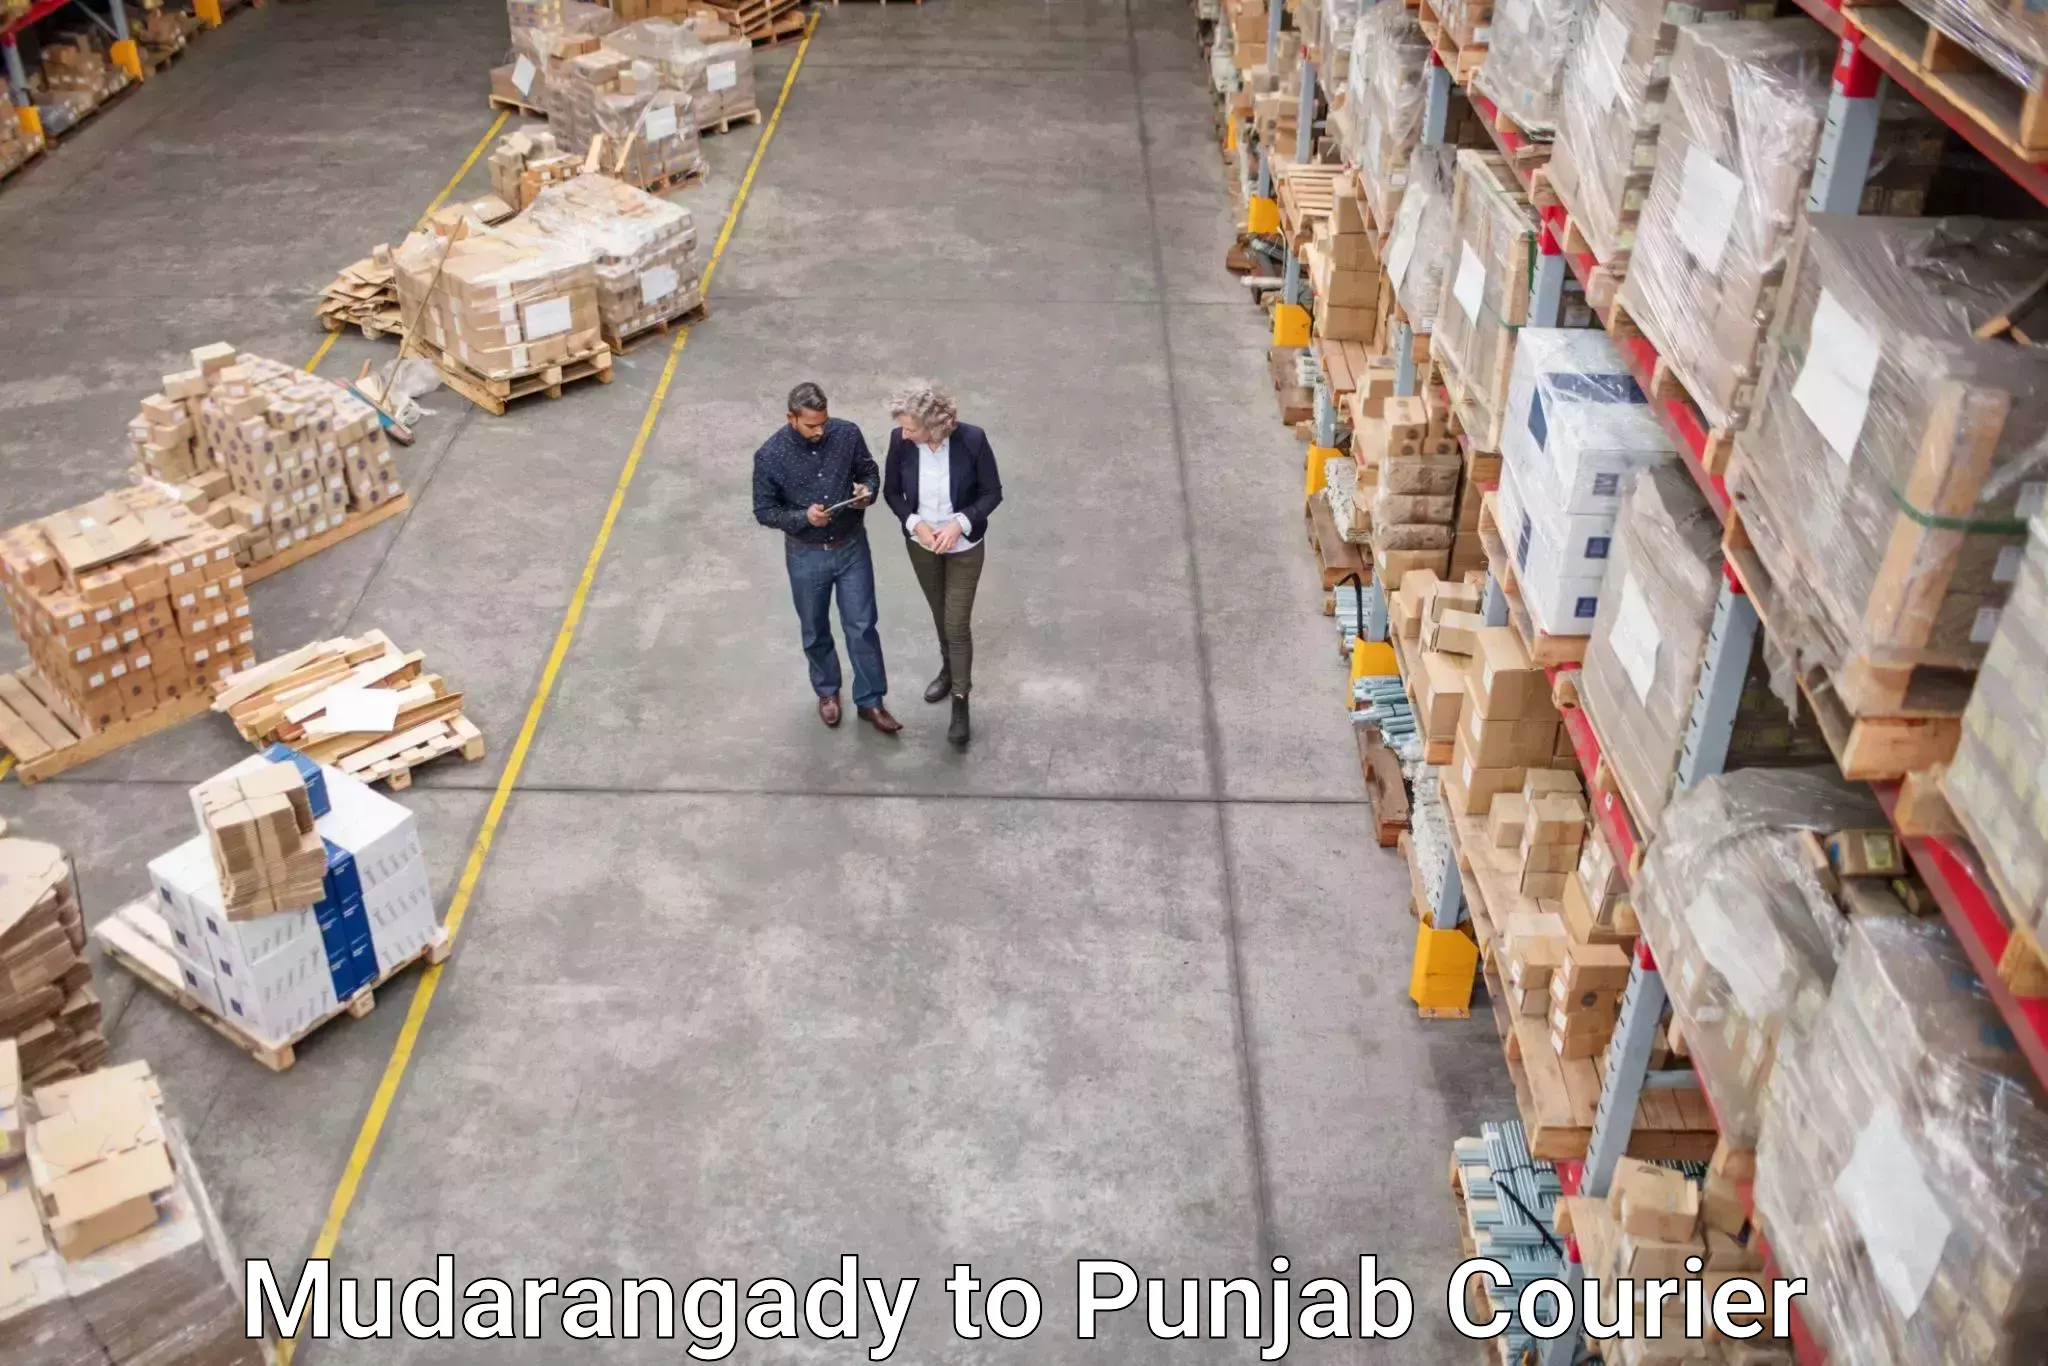 Doorstep delivery service Mudarangady to Punjab